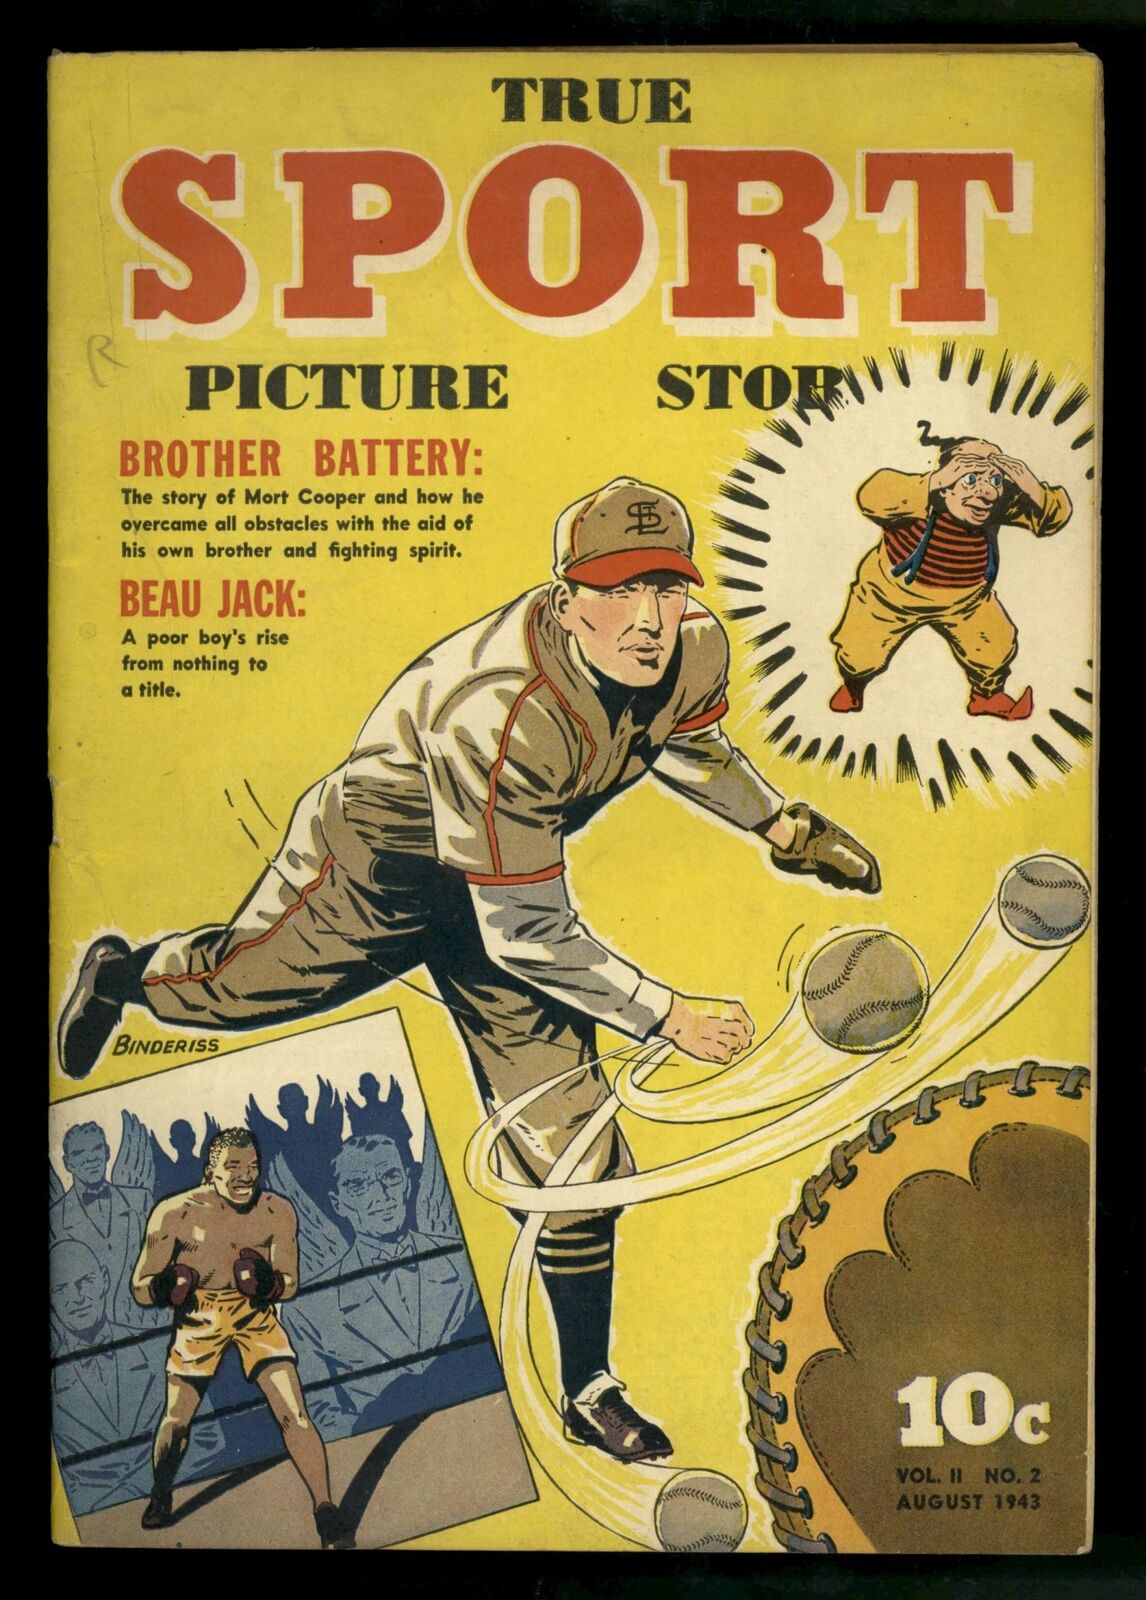 1944 True Sport Picture Stories Vol. 2